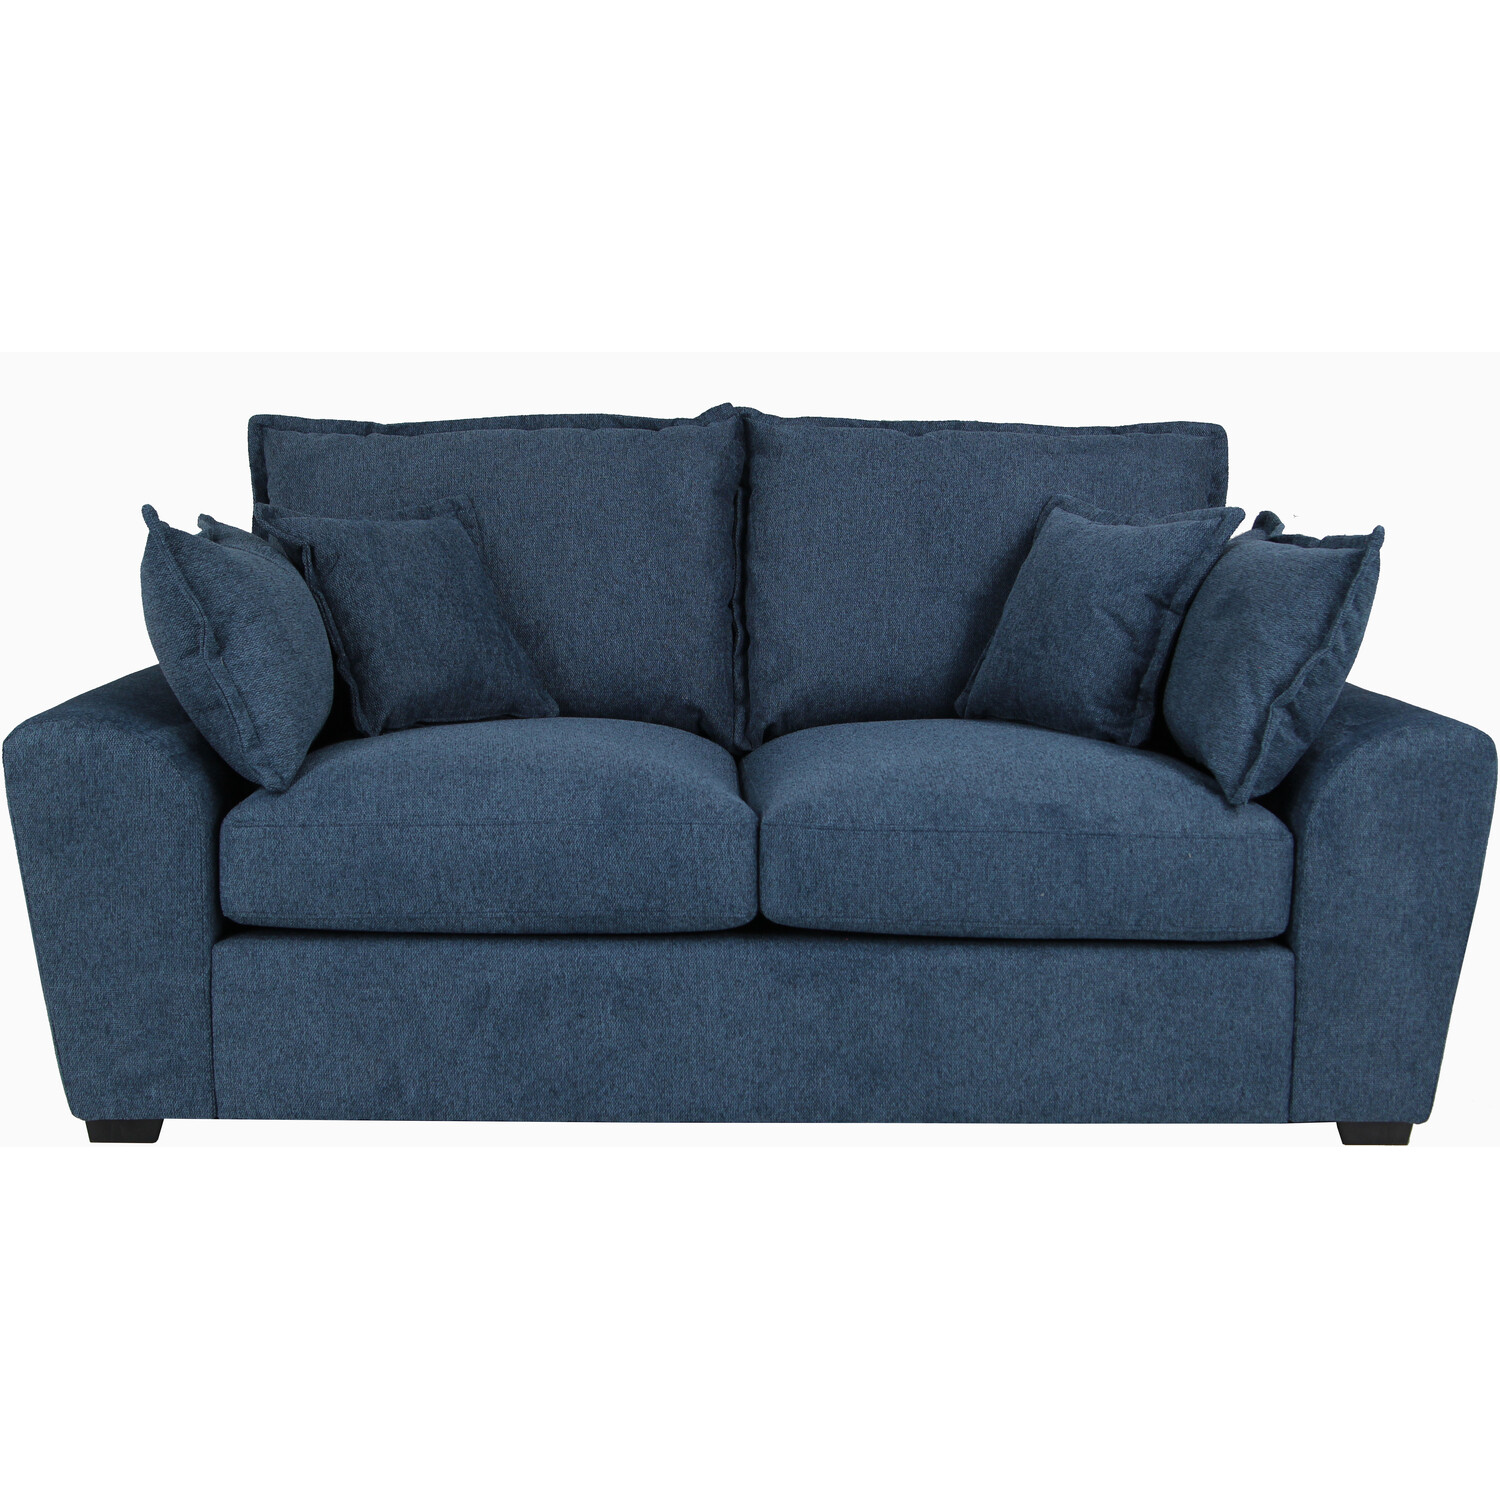 Ryder 3 Seater Blue Fabric Sofa Image 2